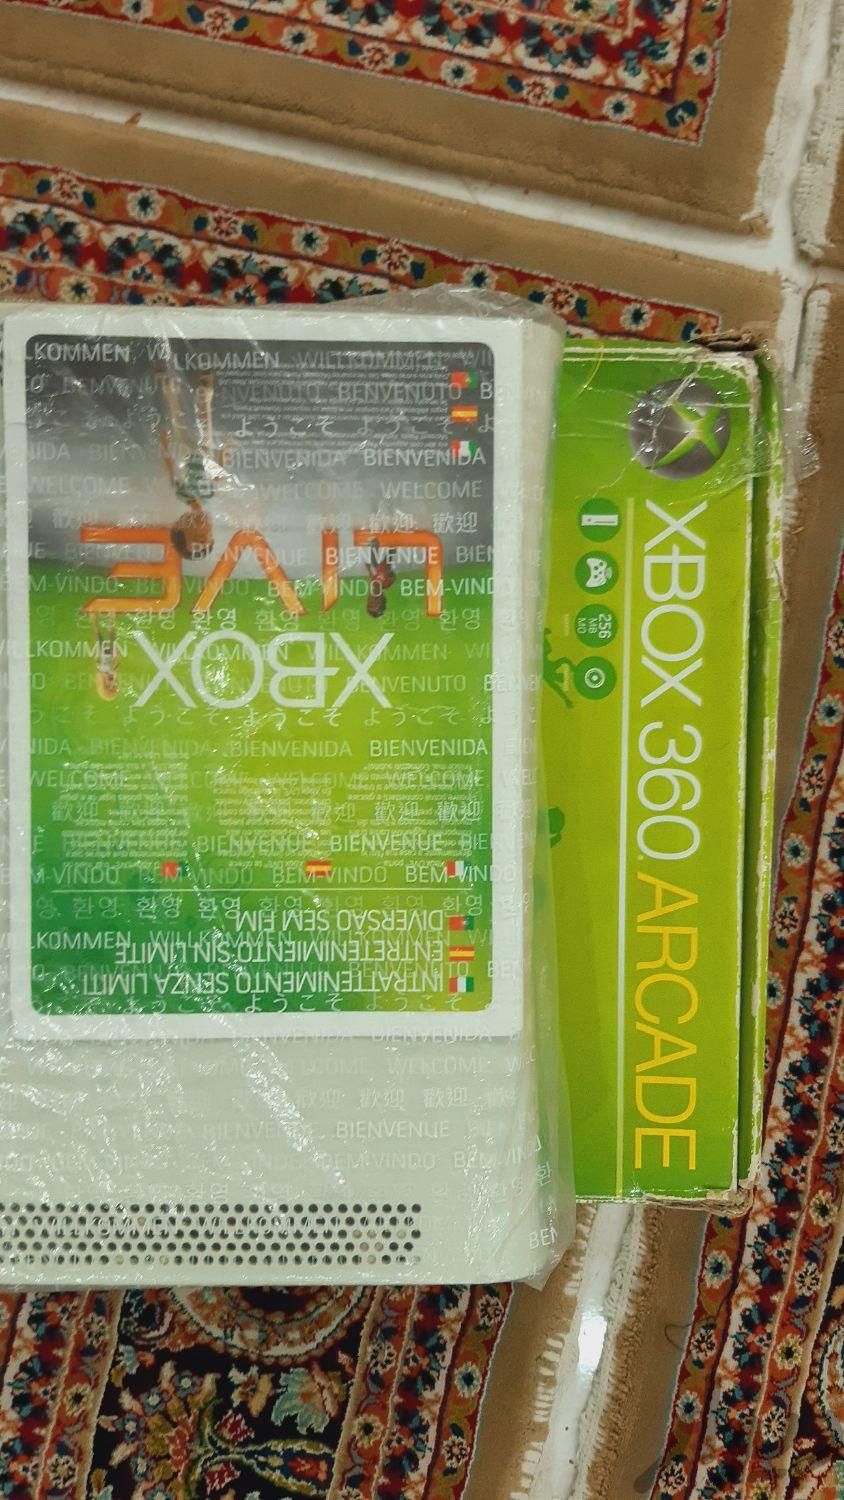 XBOX 360 ARCADE ایکس باکس ۳۶۰ آرکید|کنسول، بازی ویدئویی و آنلاین|تهران, زیبادشت|دیوار